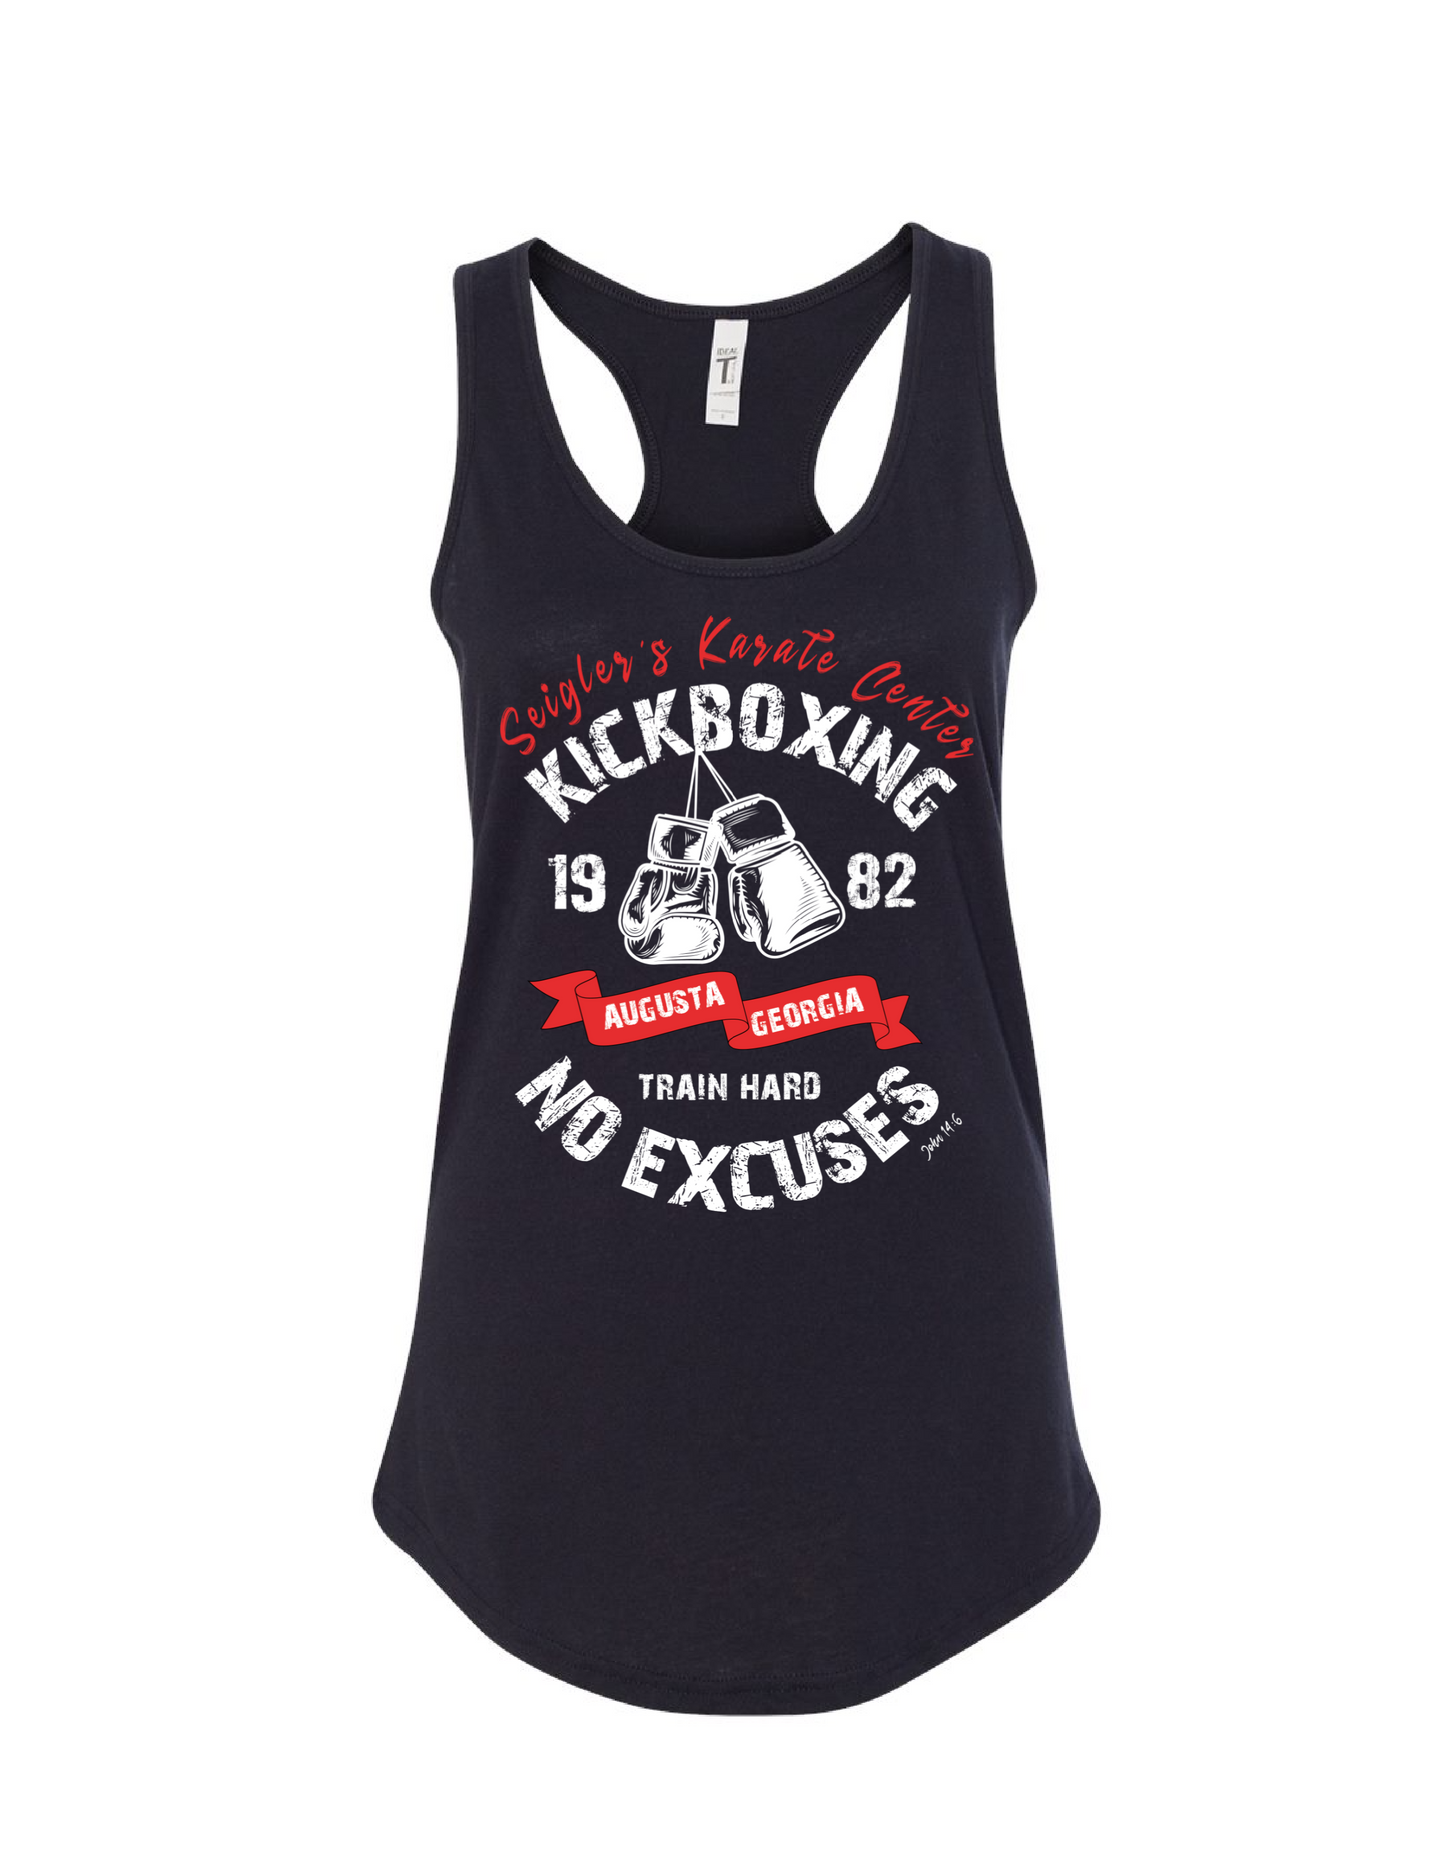 "No Excuses" Kickboxing Tank Top